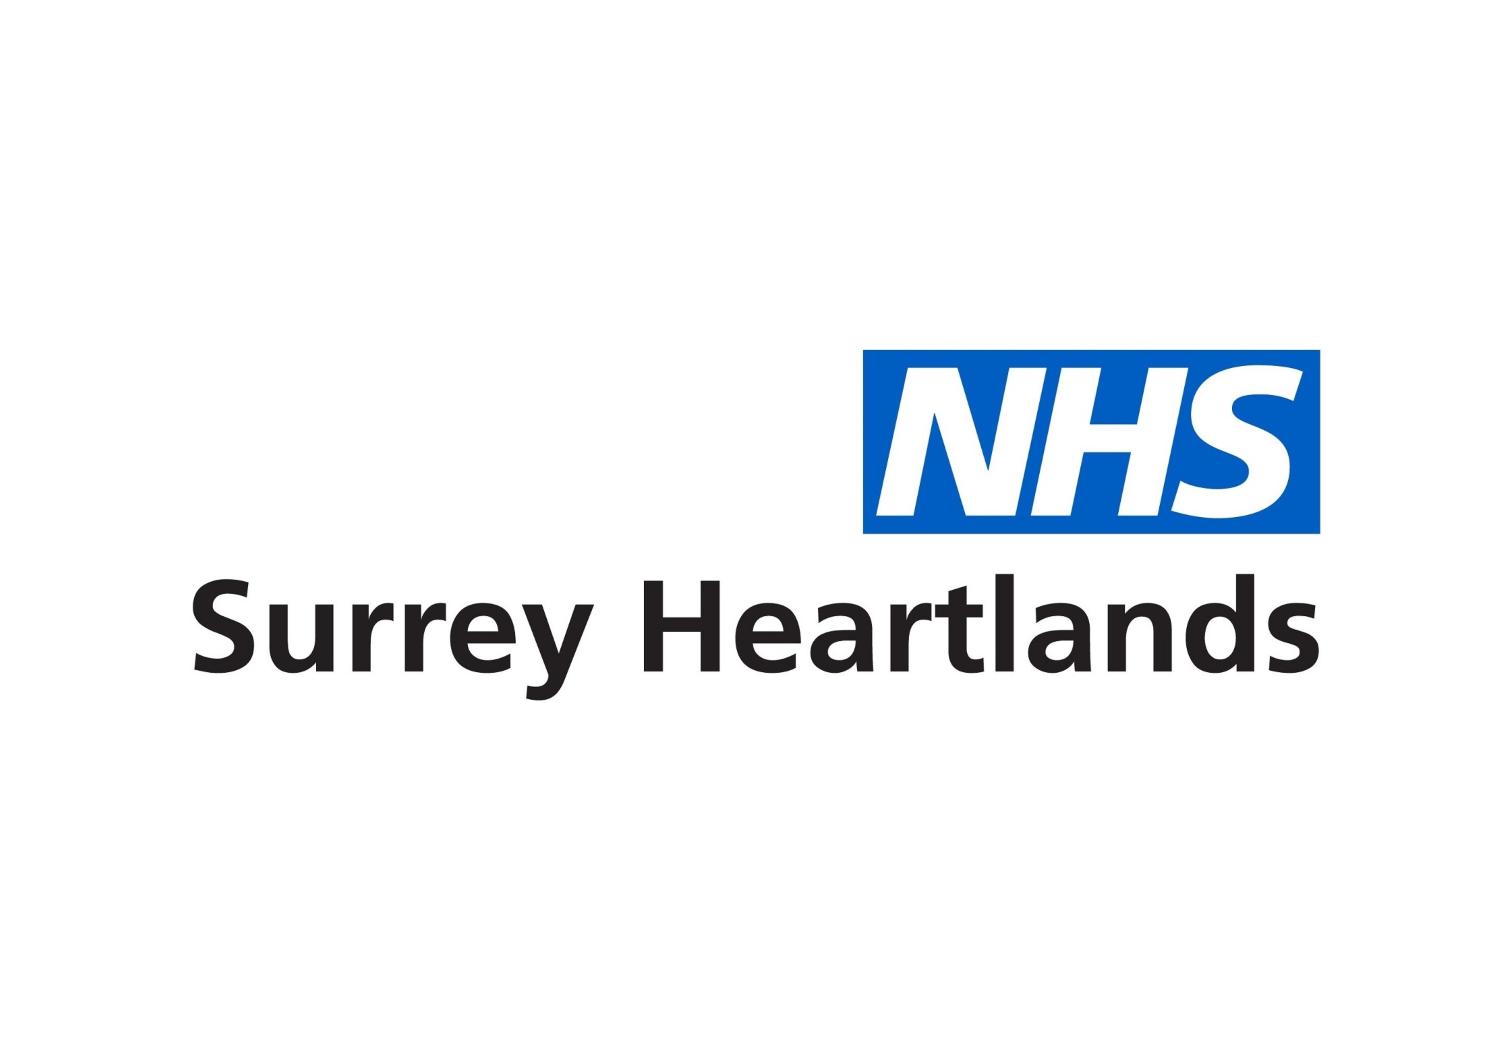 NHS Surrey Heartlands